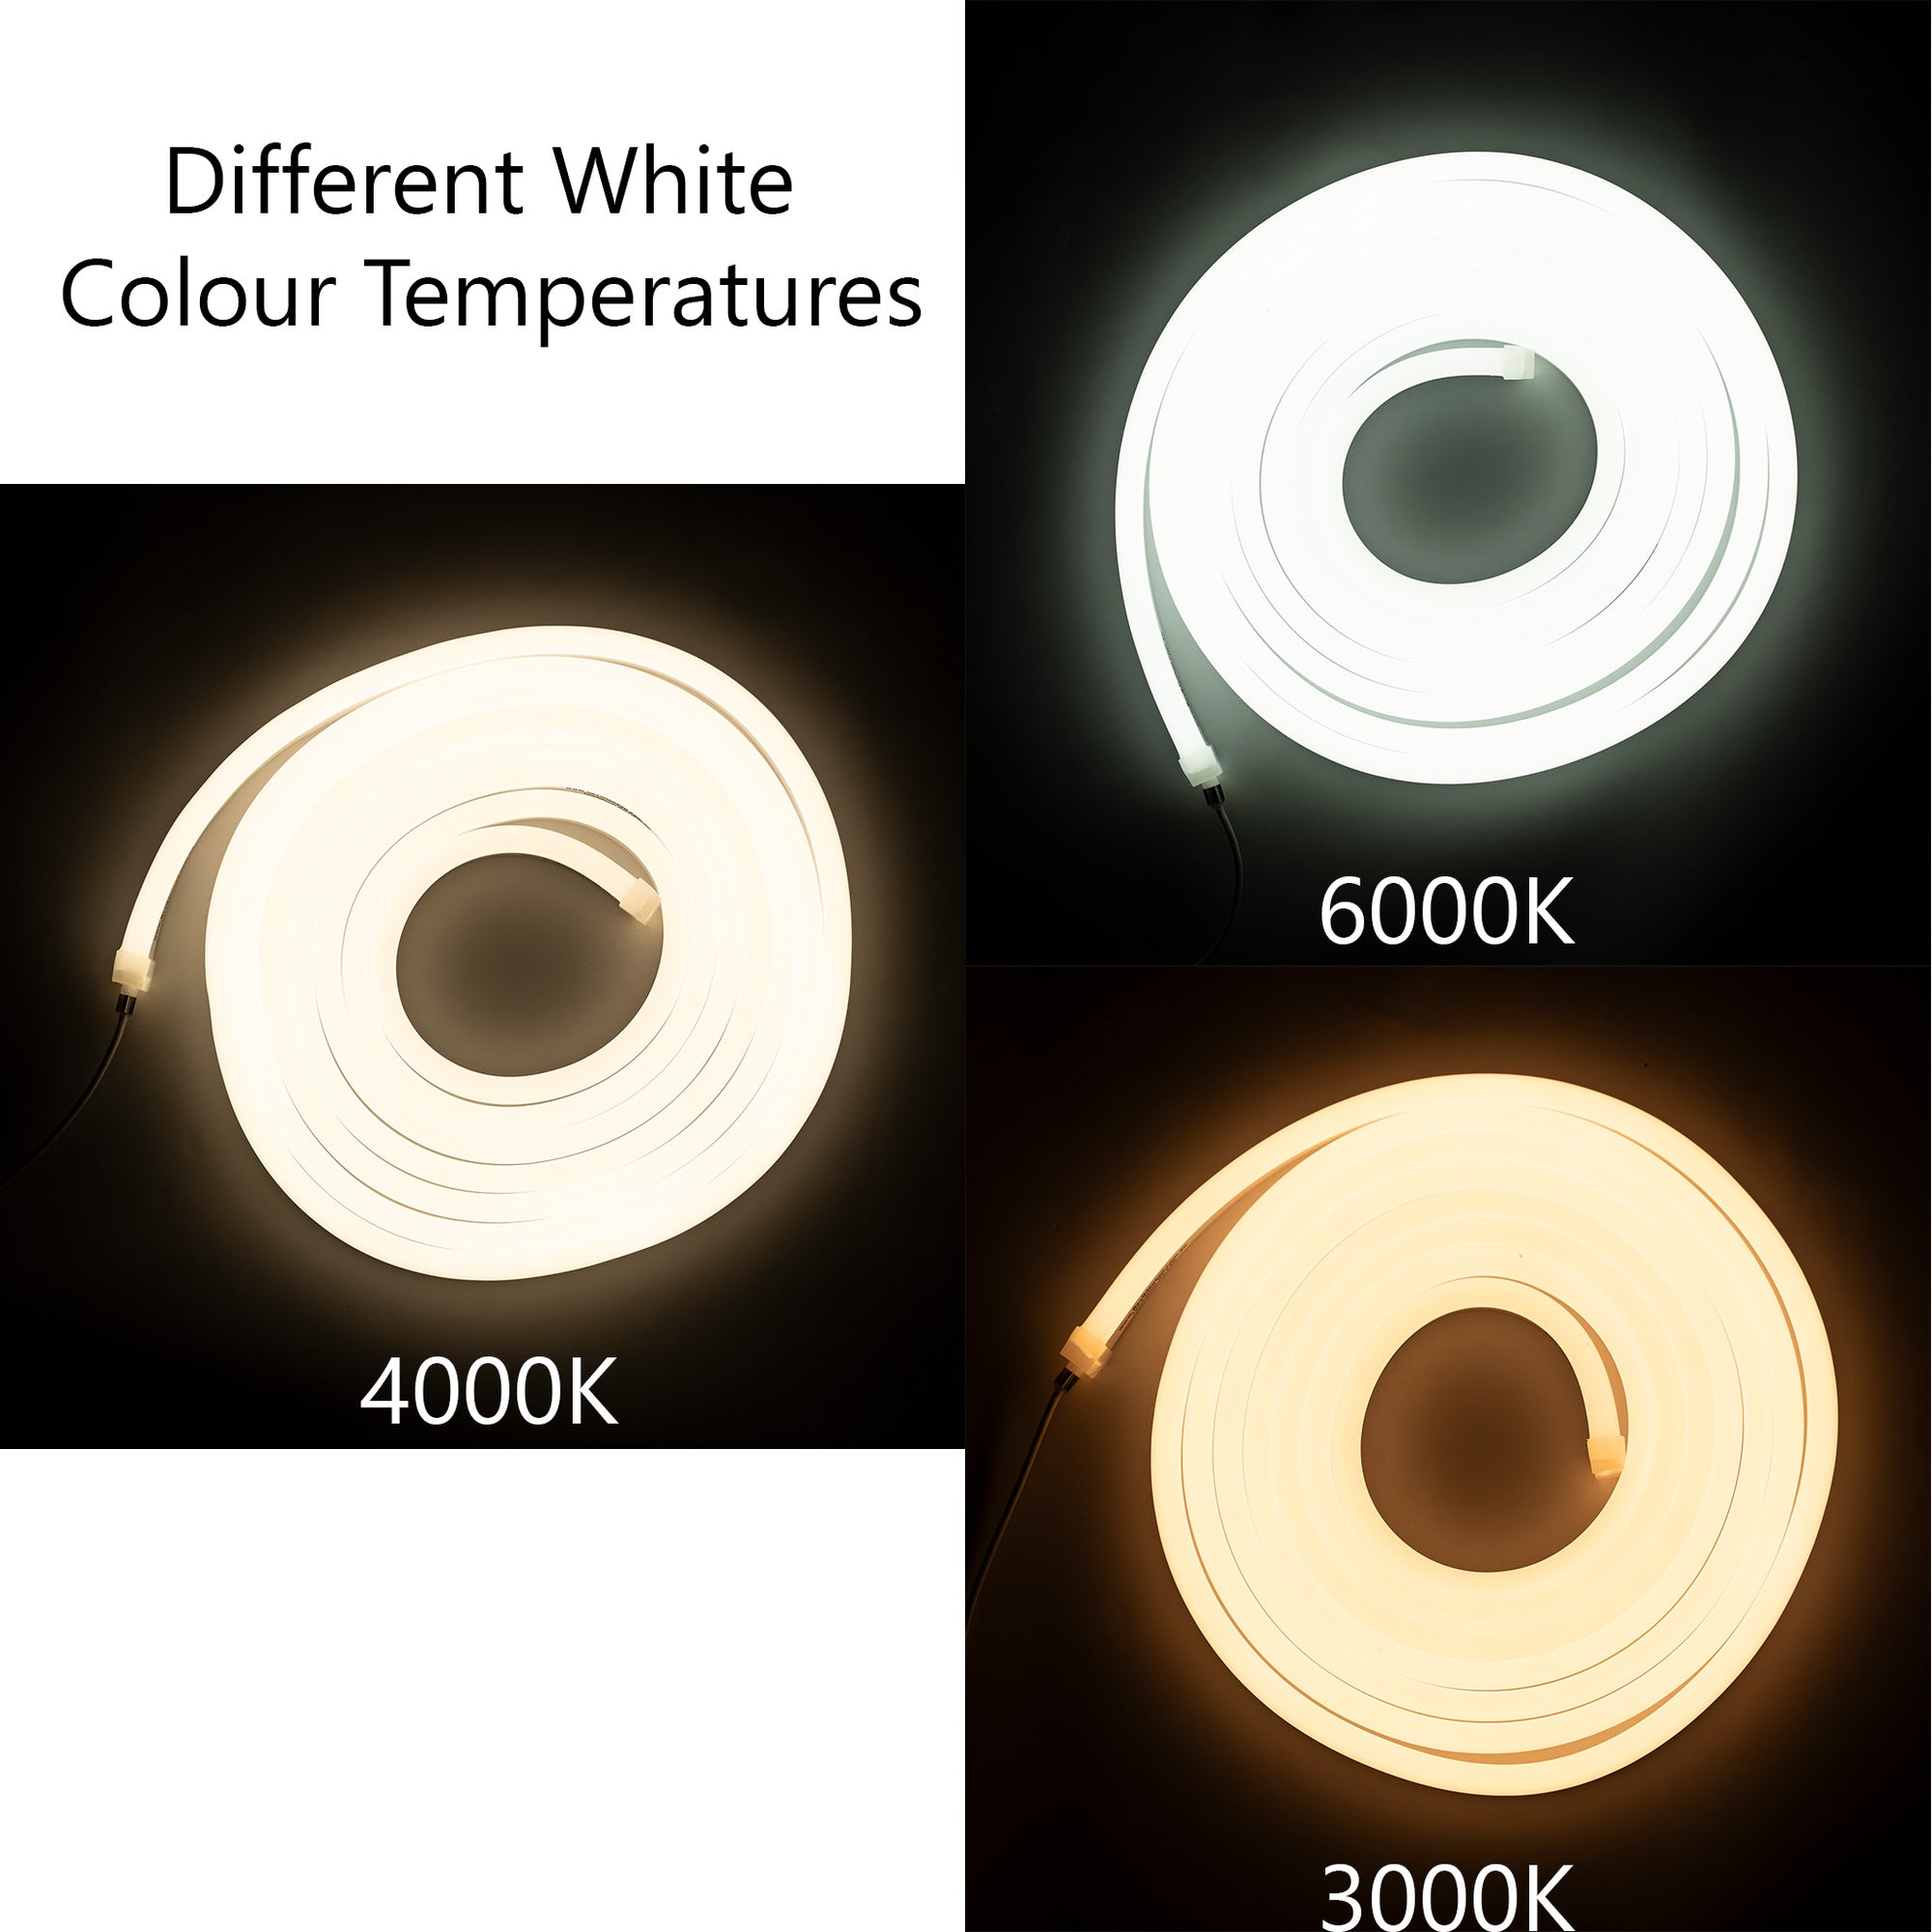 Guide: Different White Colour Temperatures